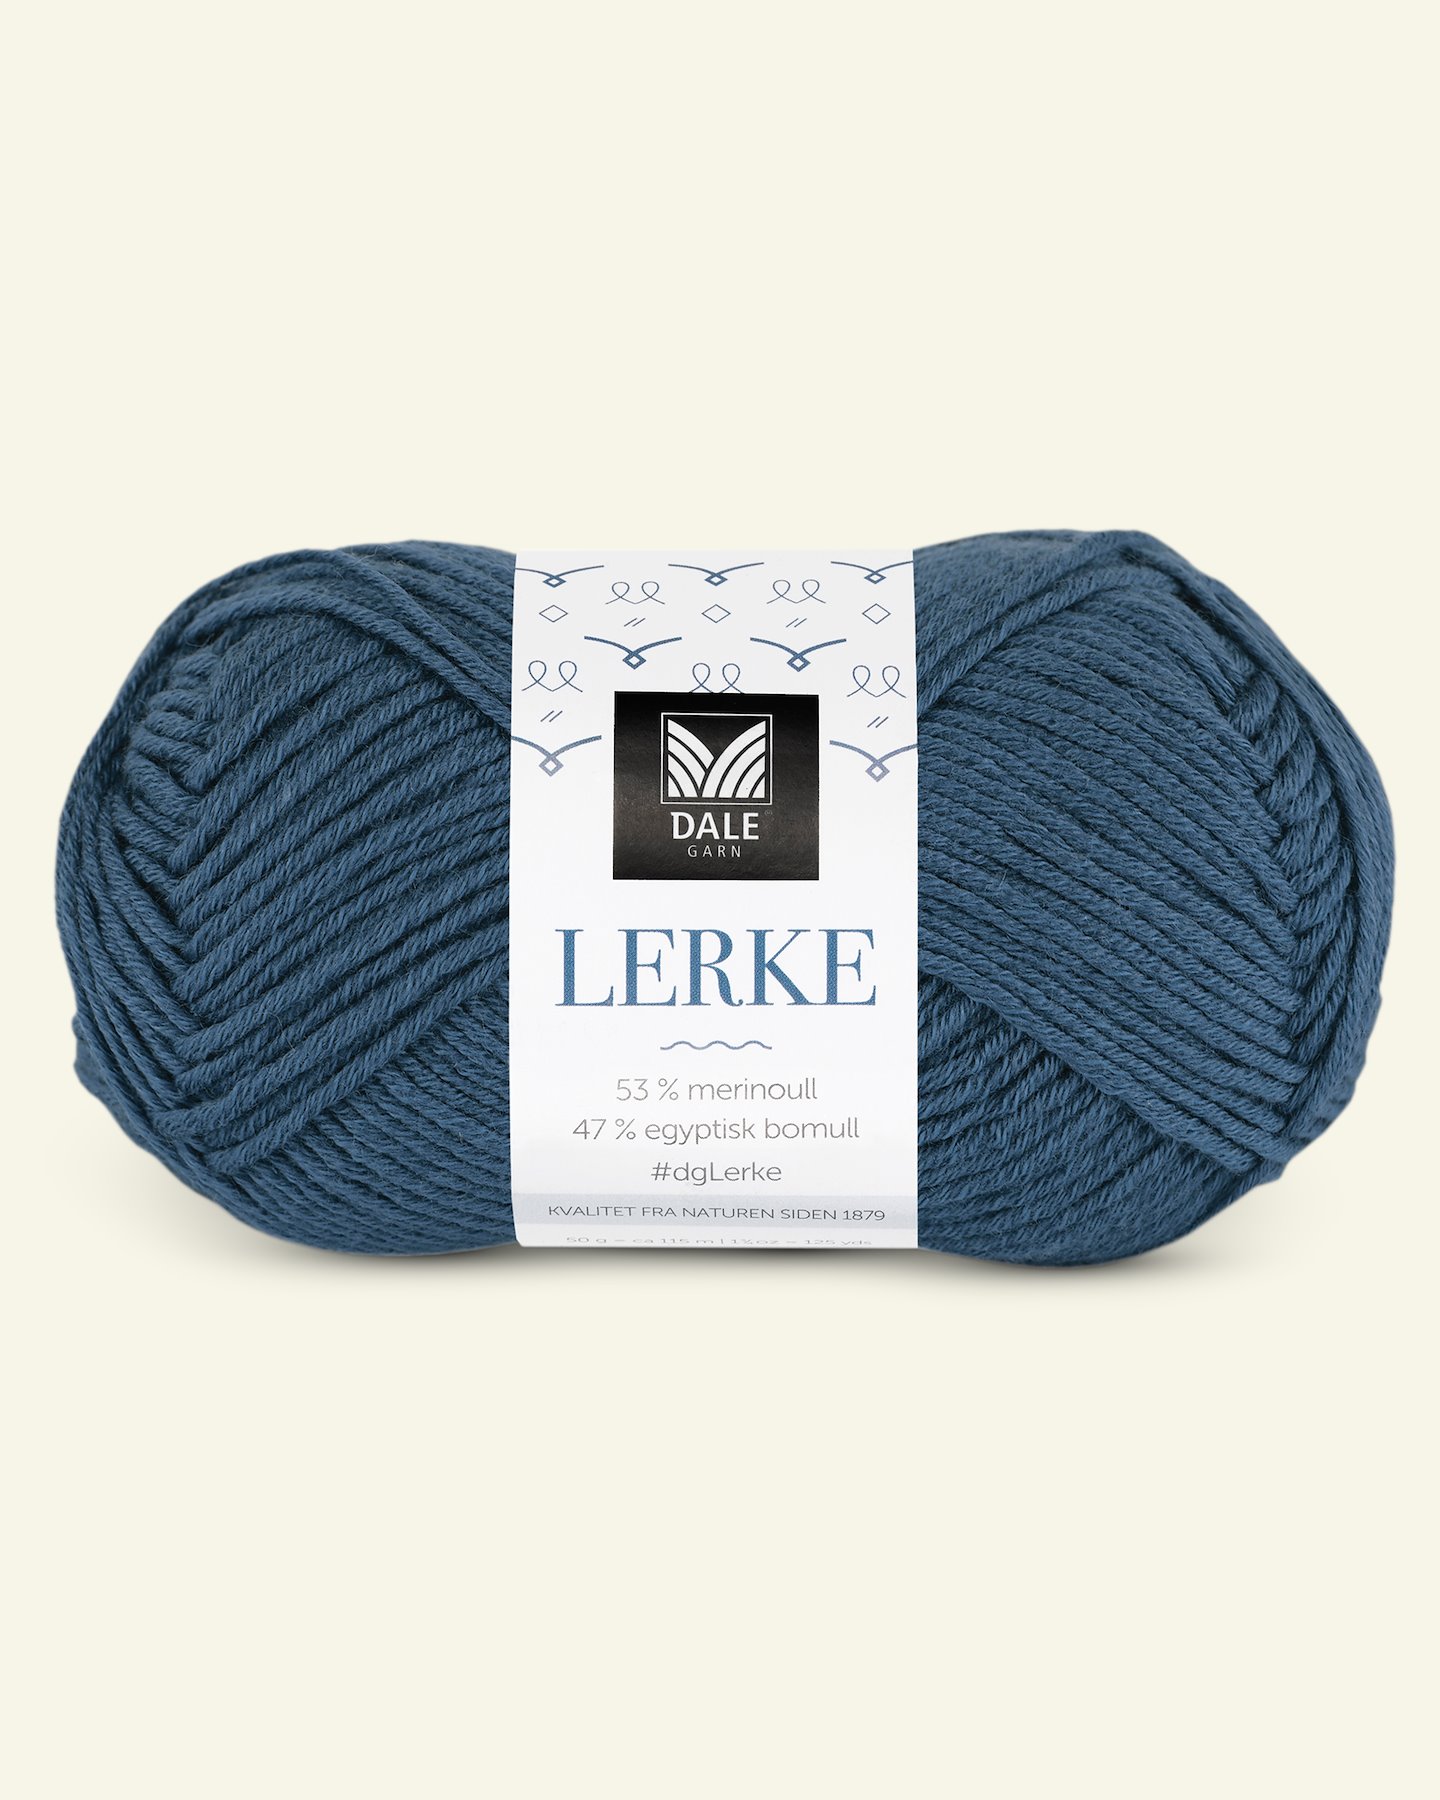 Dale Garn, merino cotton yarn "Lerke", dark denim (8105) 90000845_pack